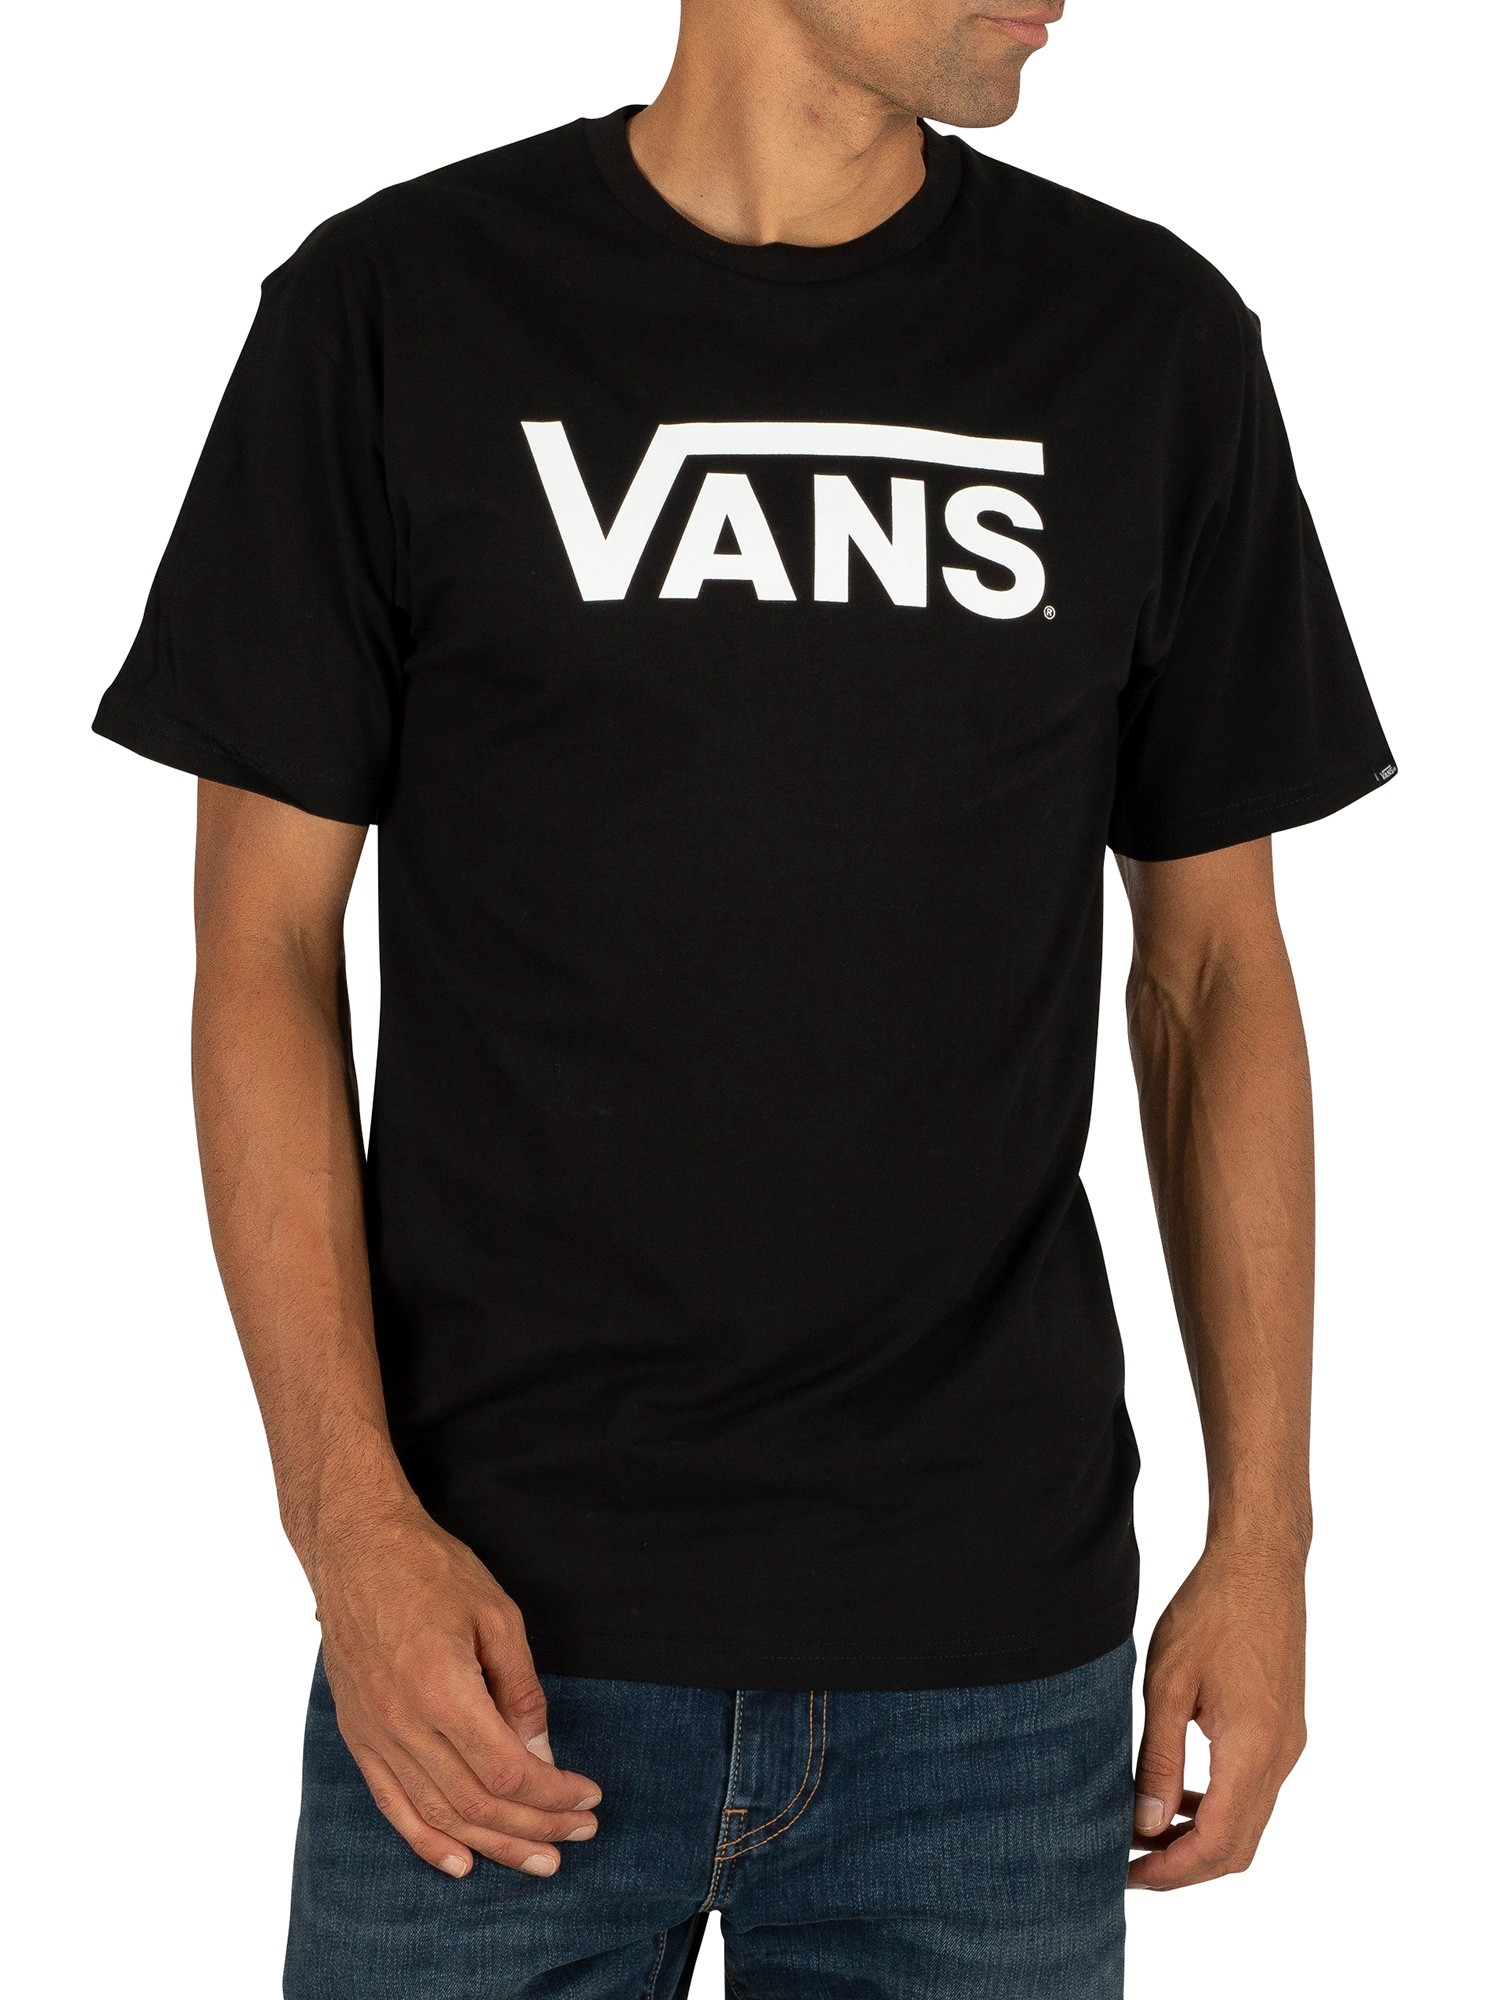 vans shirt black and white